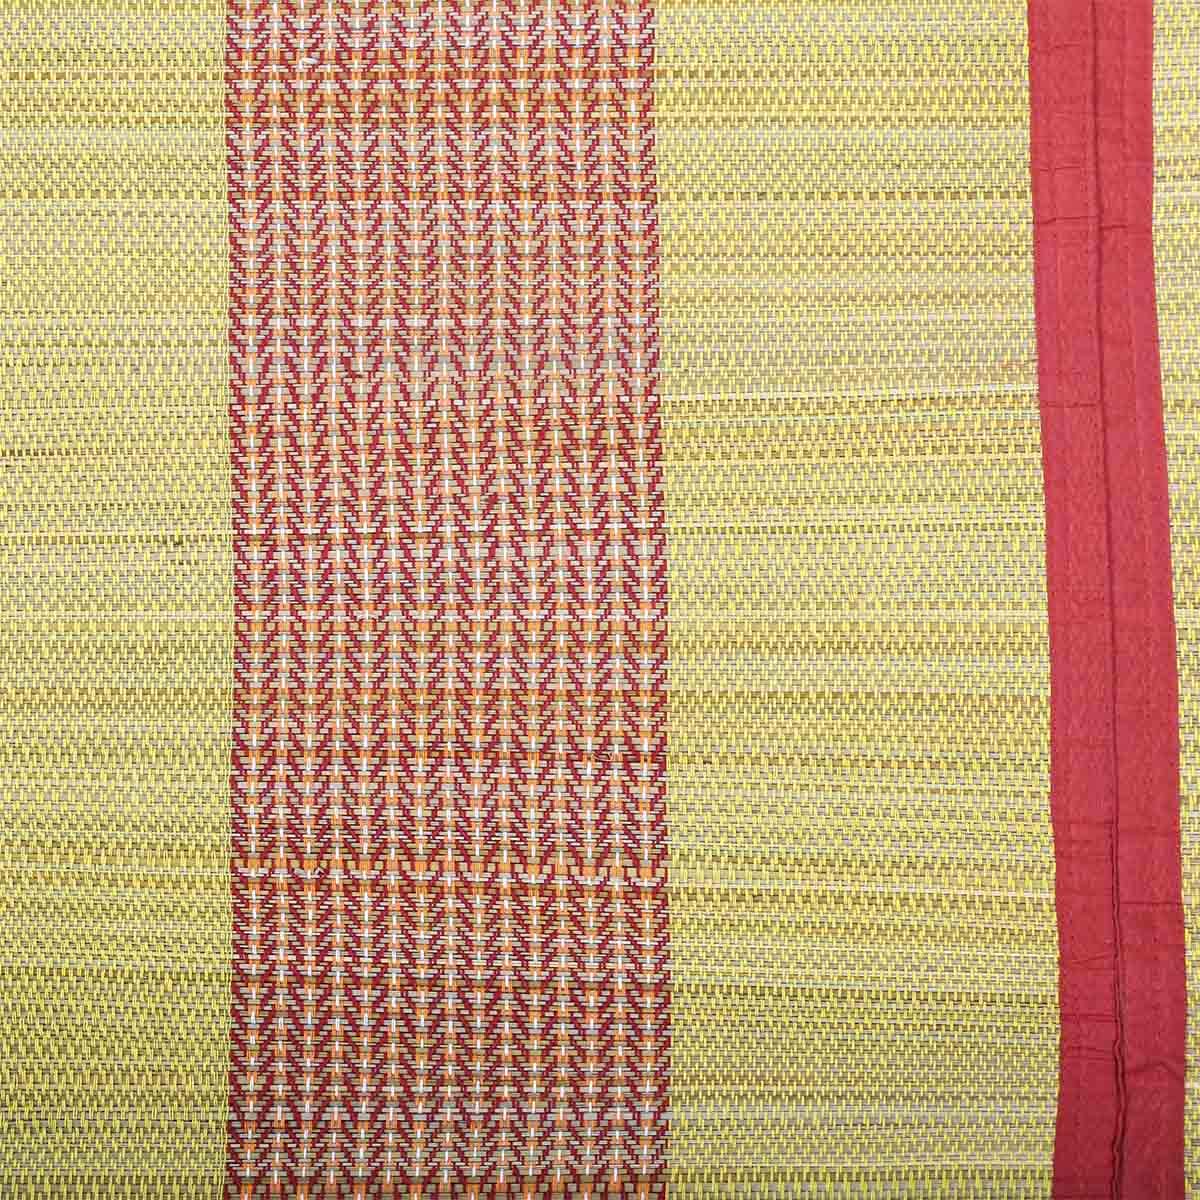 Chatai Floor Mat Foldable handwoven Organic made of Madurkathi Grass for Sleeping, Sitting, Yoga - T3-44